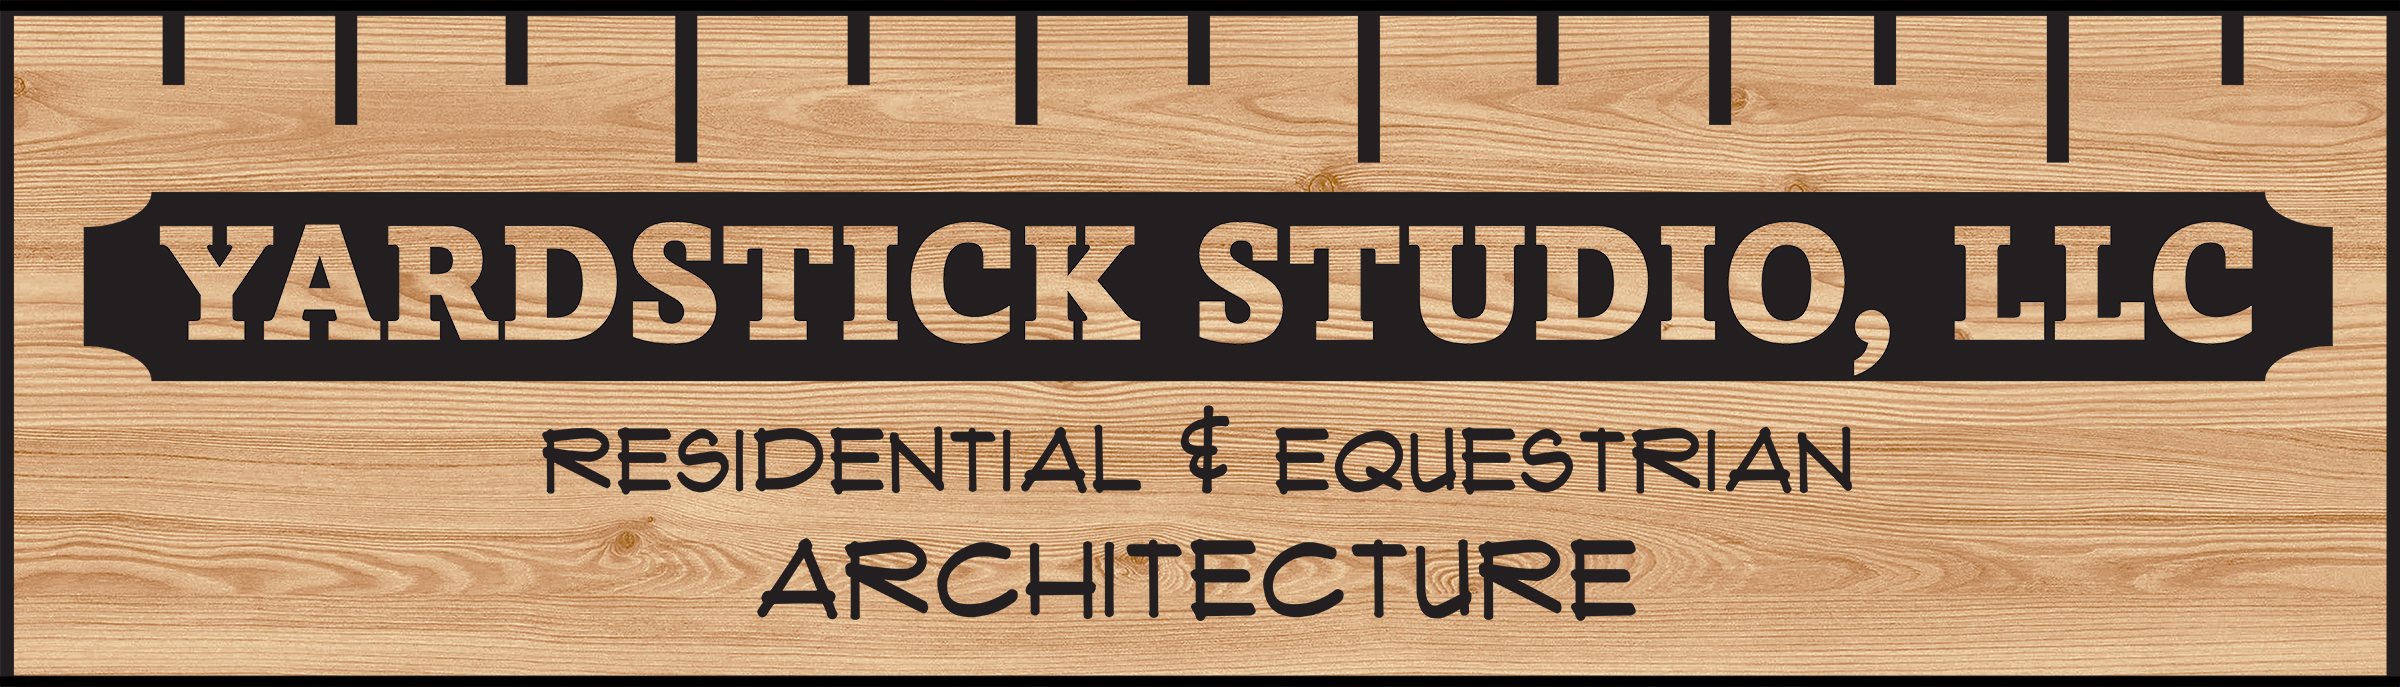 Yardstick Studio, LLC Logo